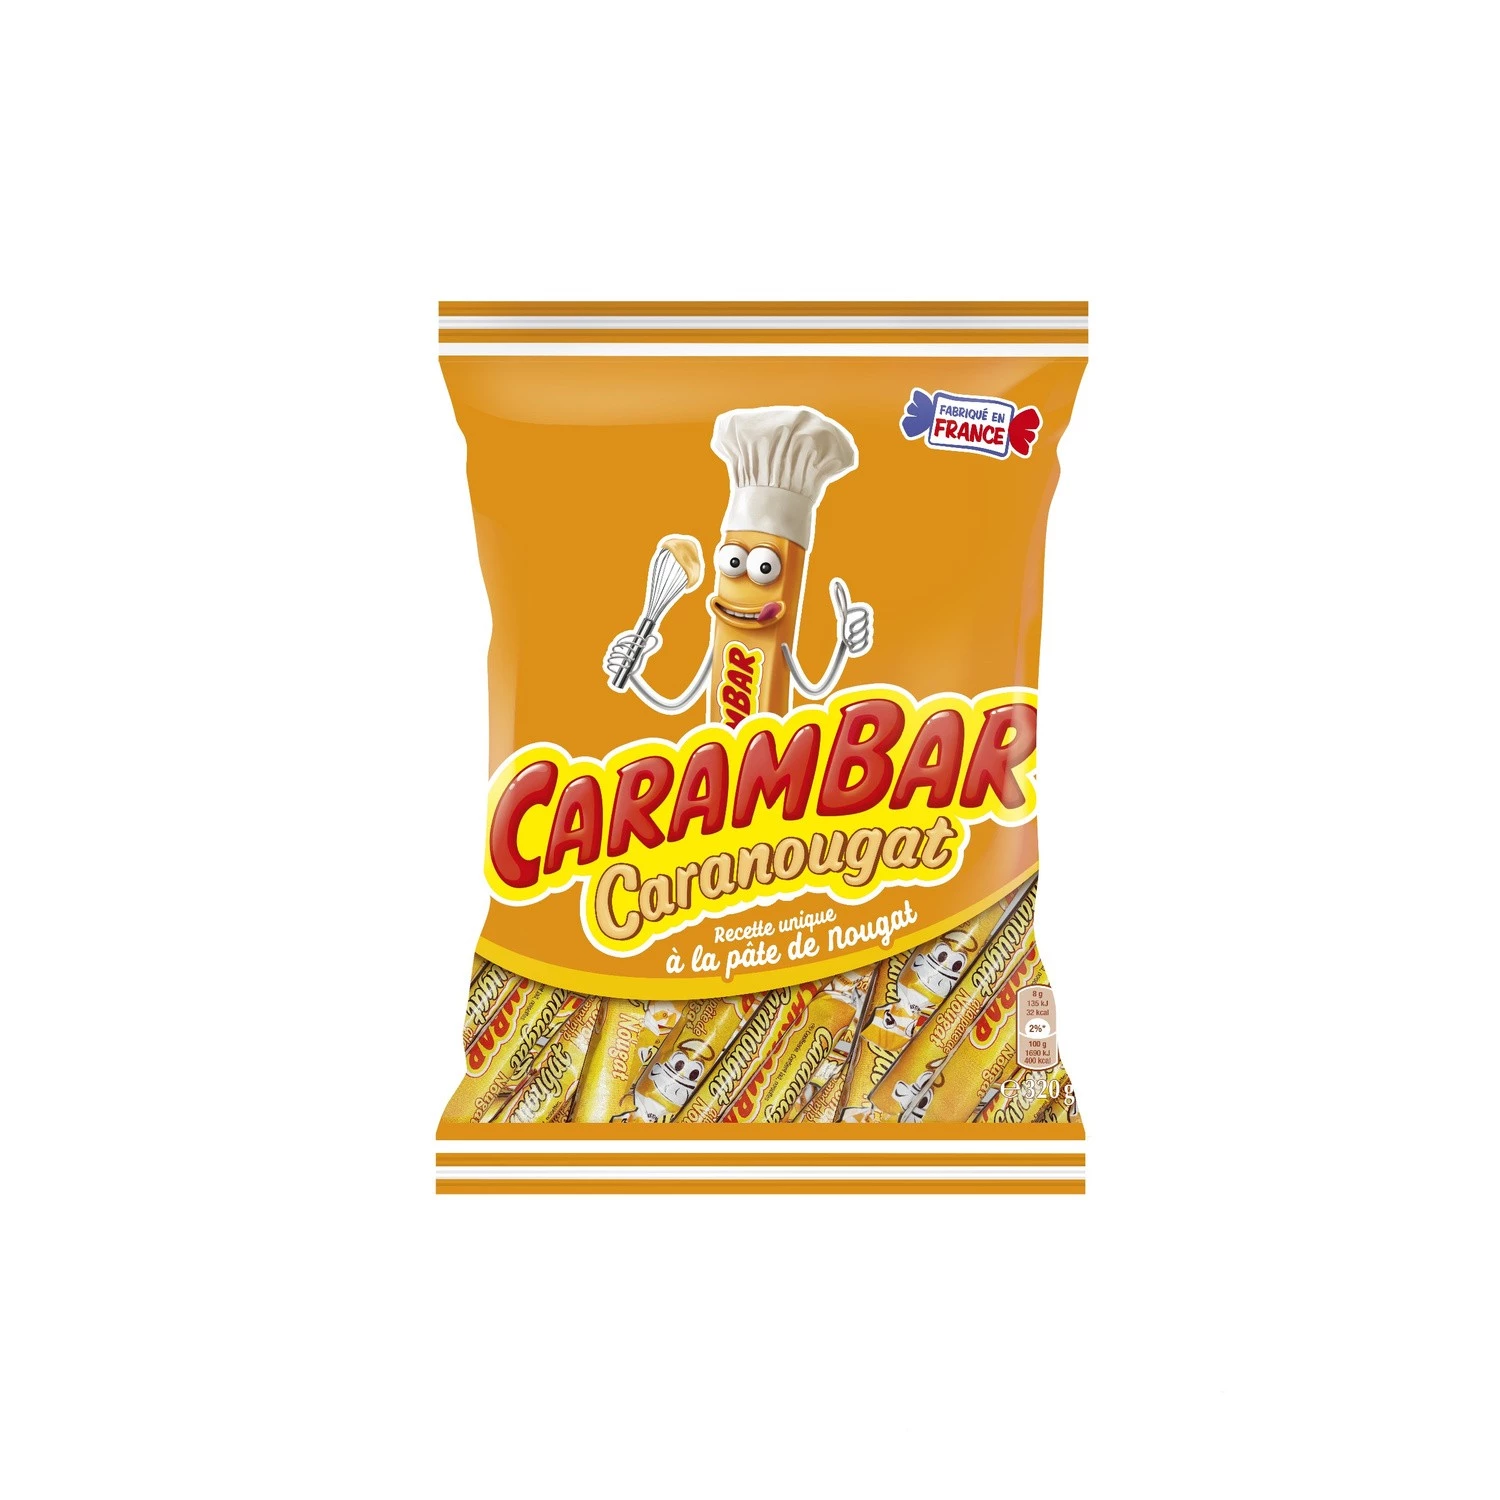 Caranougat-Bonbon 320g - CARAMBAR